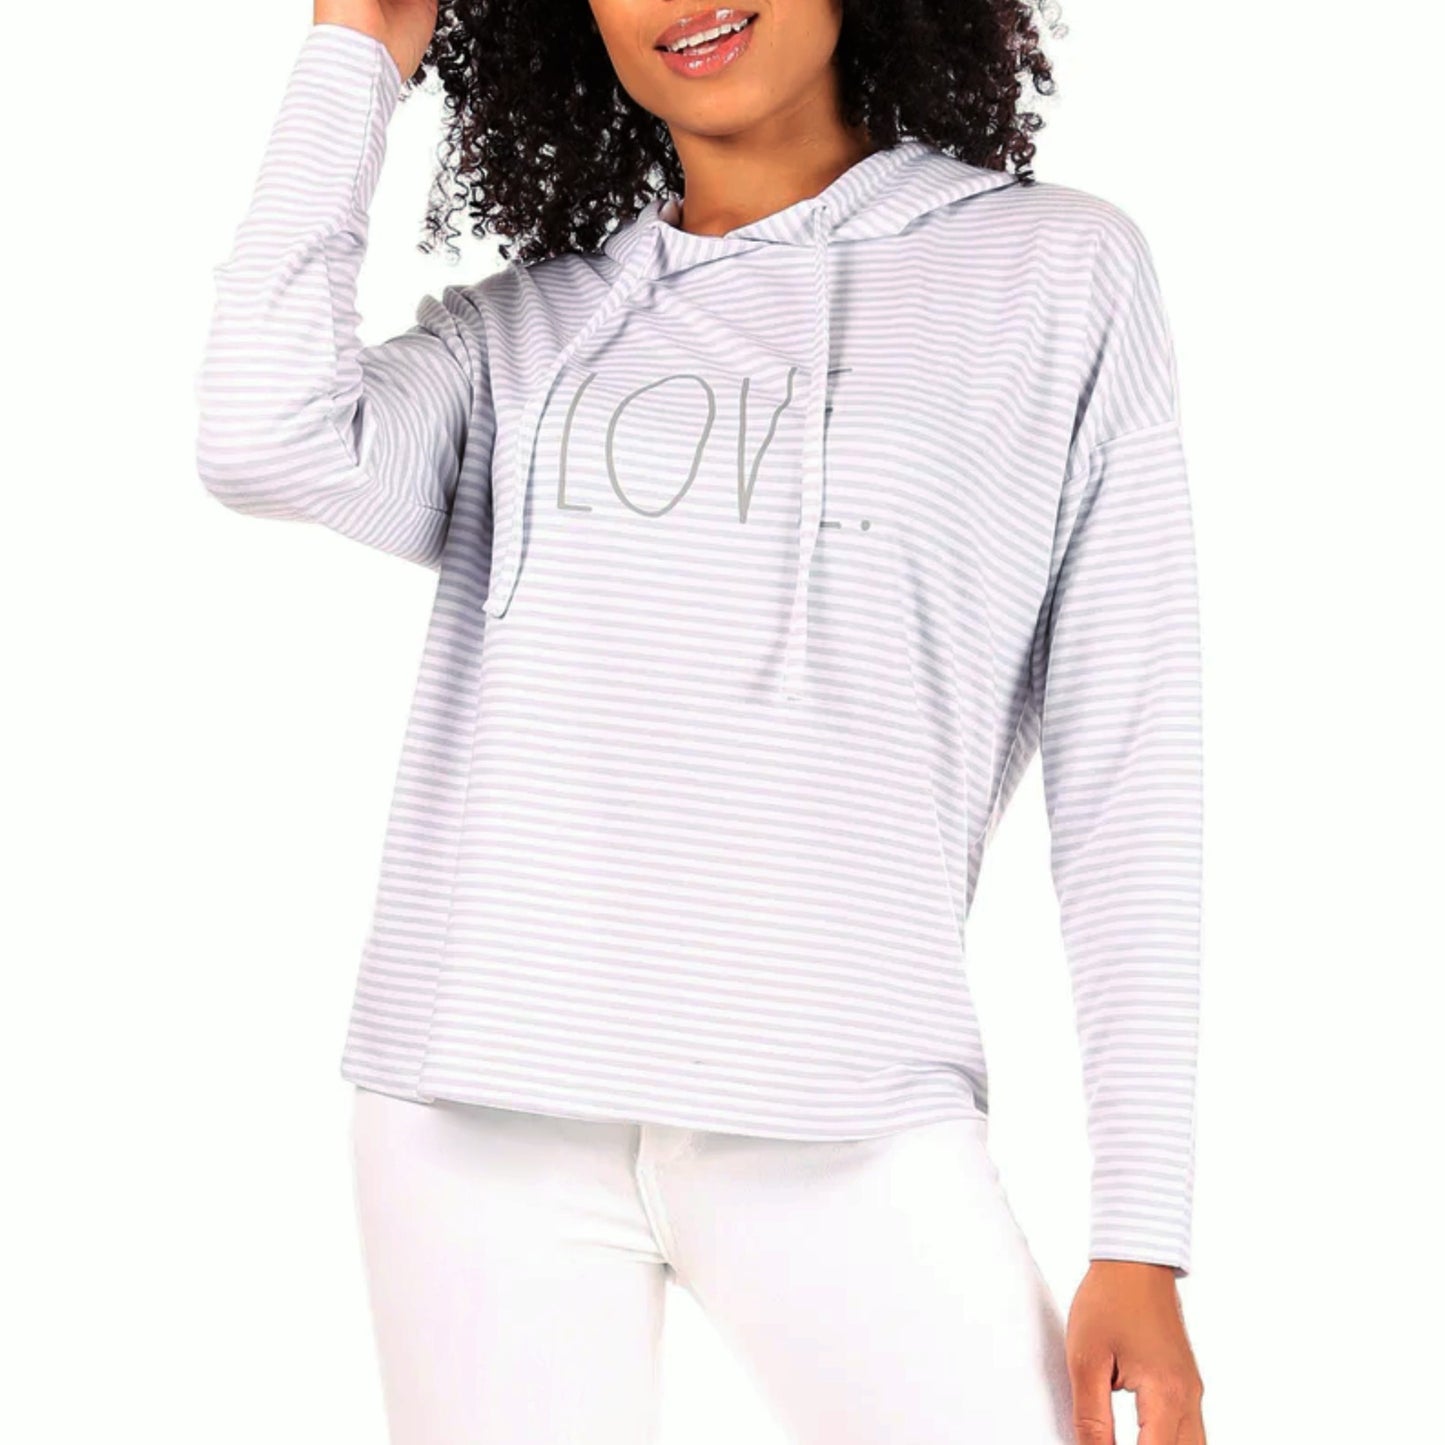 Rae Dunn Women's Ultra Soft Love Graphic Print Striped Sweatshirt Top Hoodie